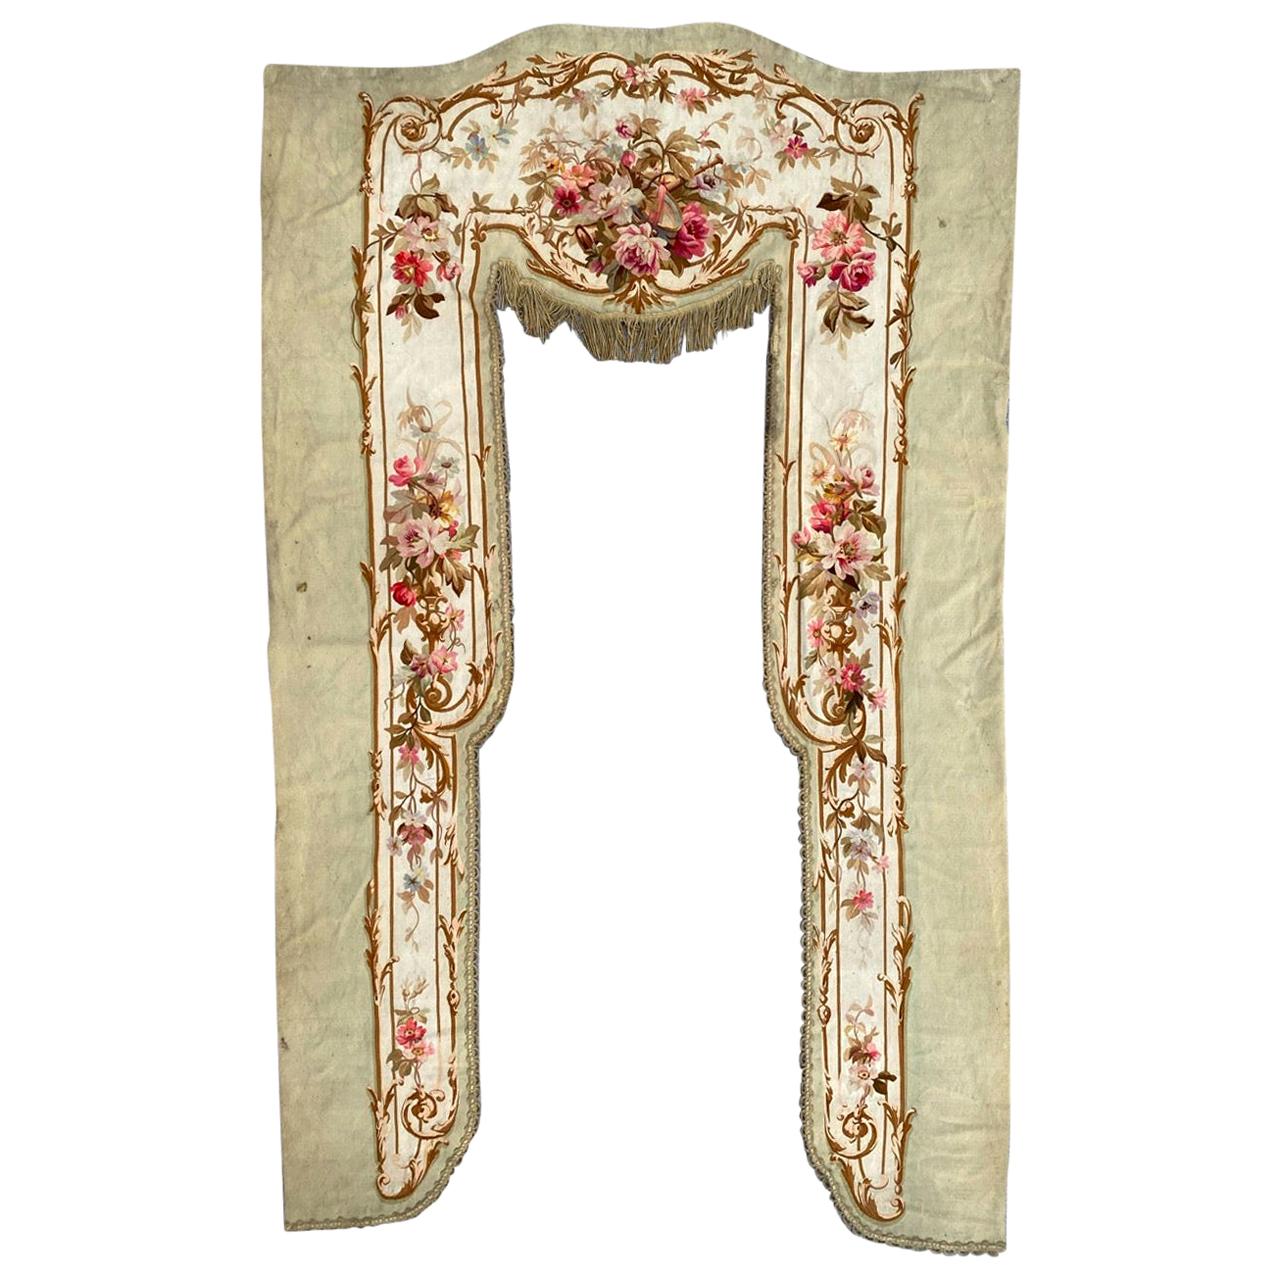 Bobyrug’s Wonderful French Valance Aubusson Tapestry